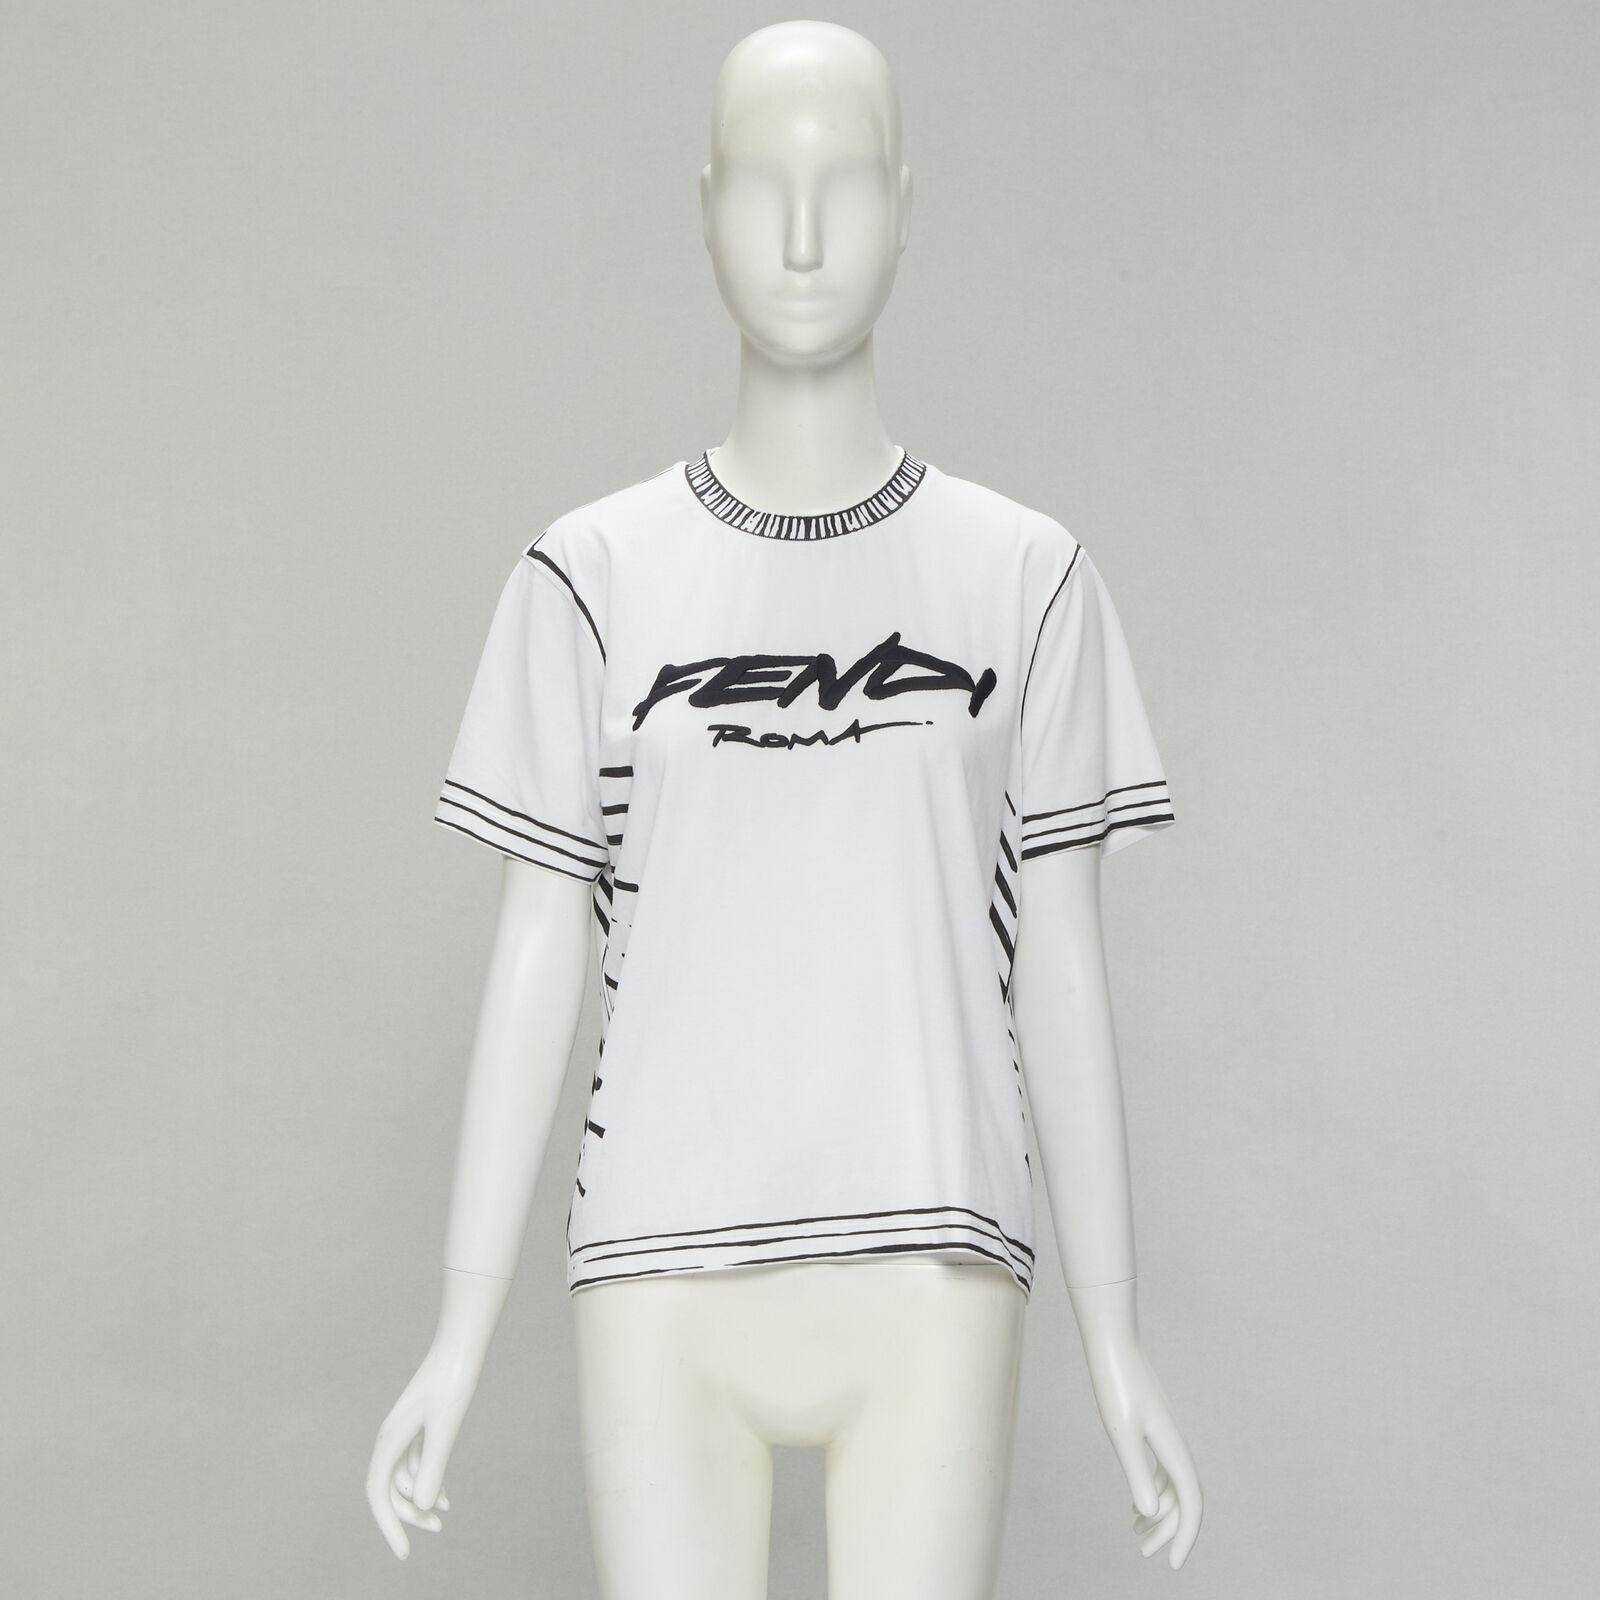 FENDI 2022 Joshua Vides white cotton illustration print logo embroidery tshirt M For Sale 5